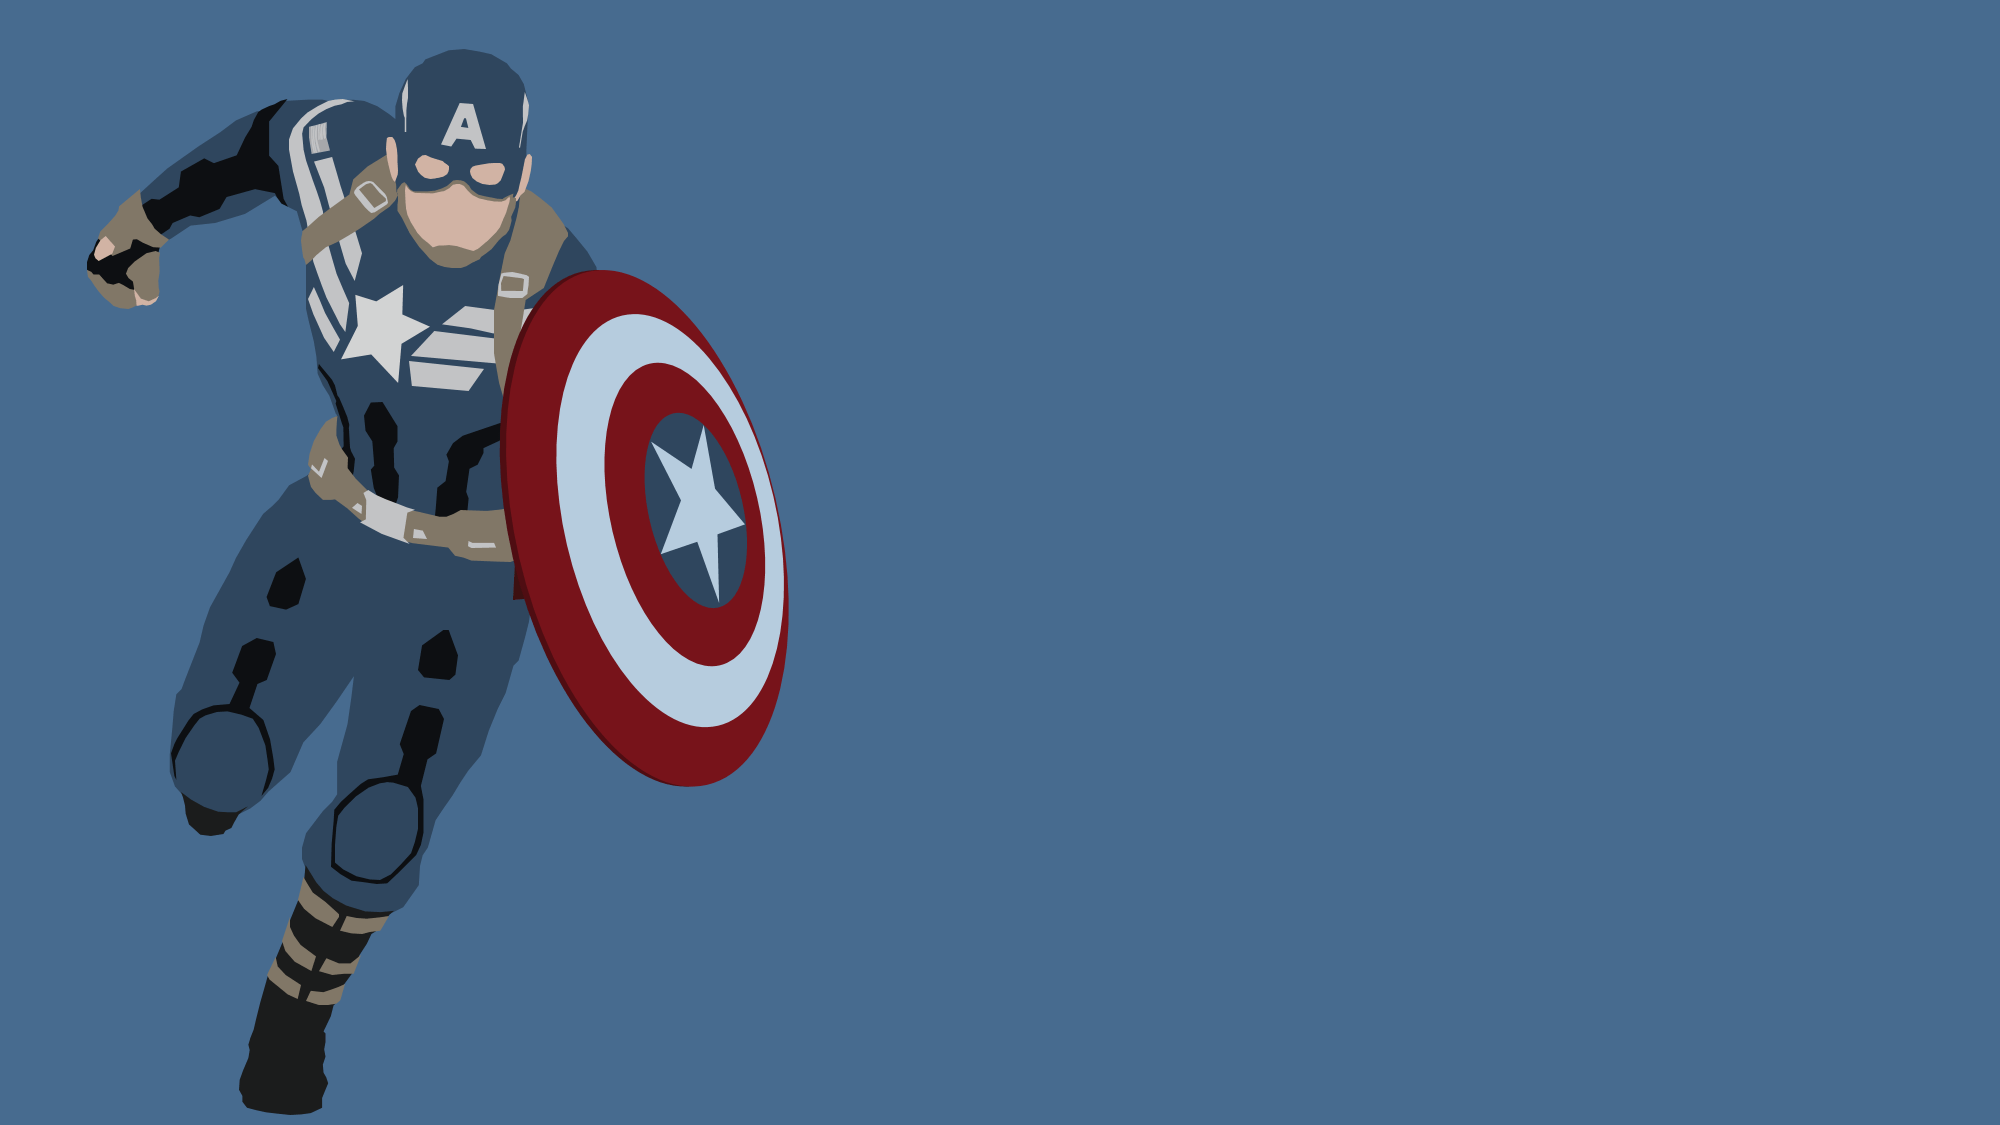 Captain America Computer Wallpaper